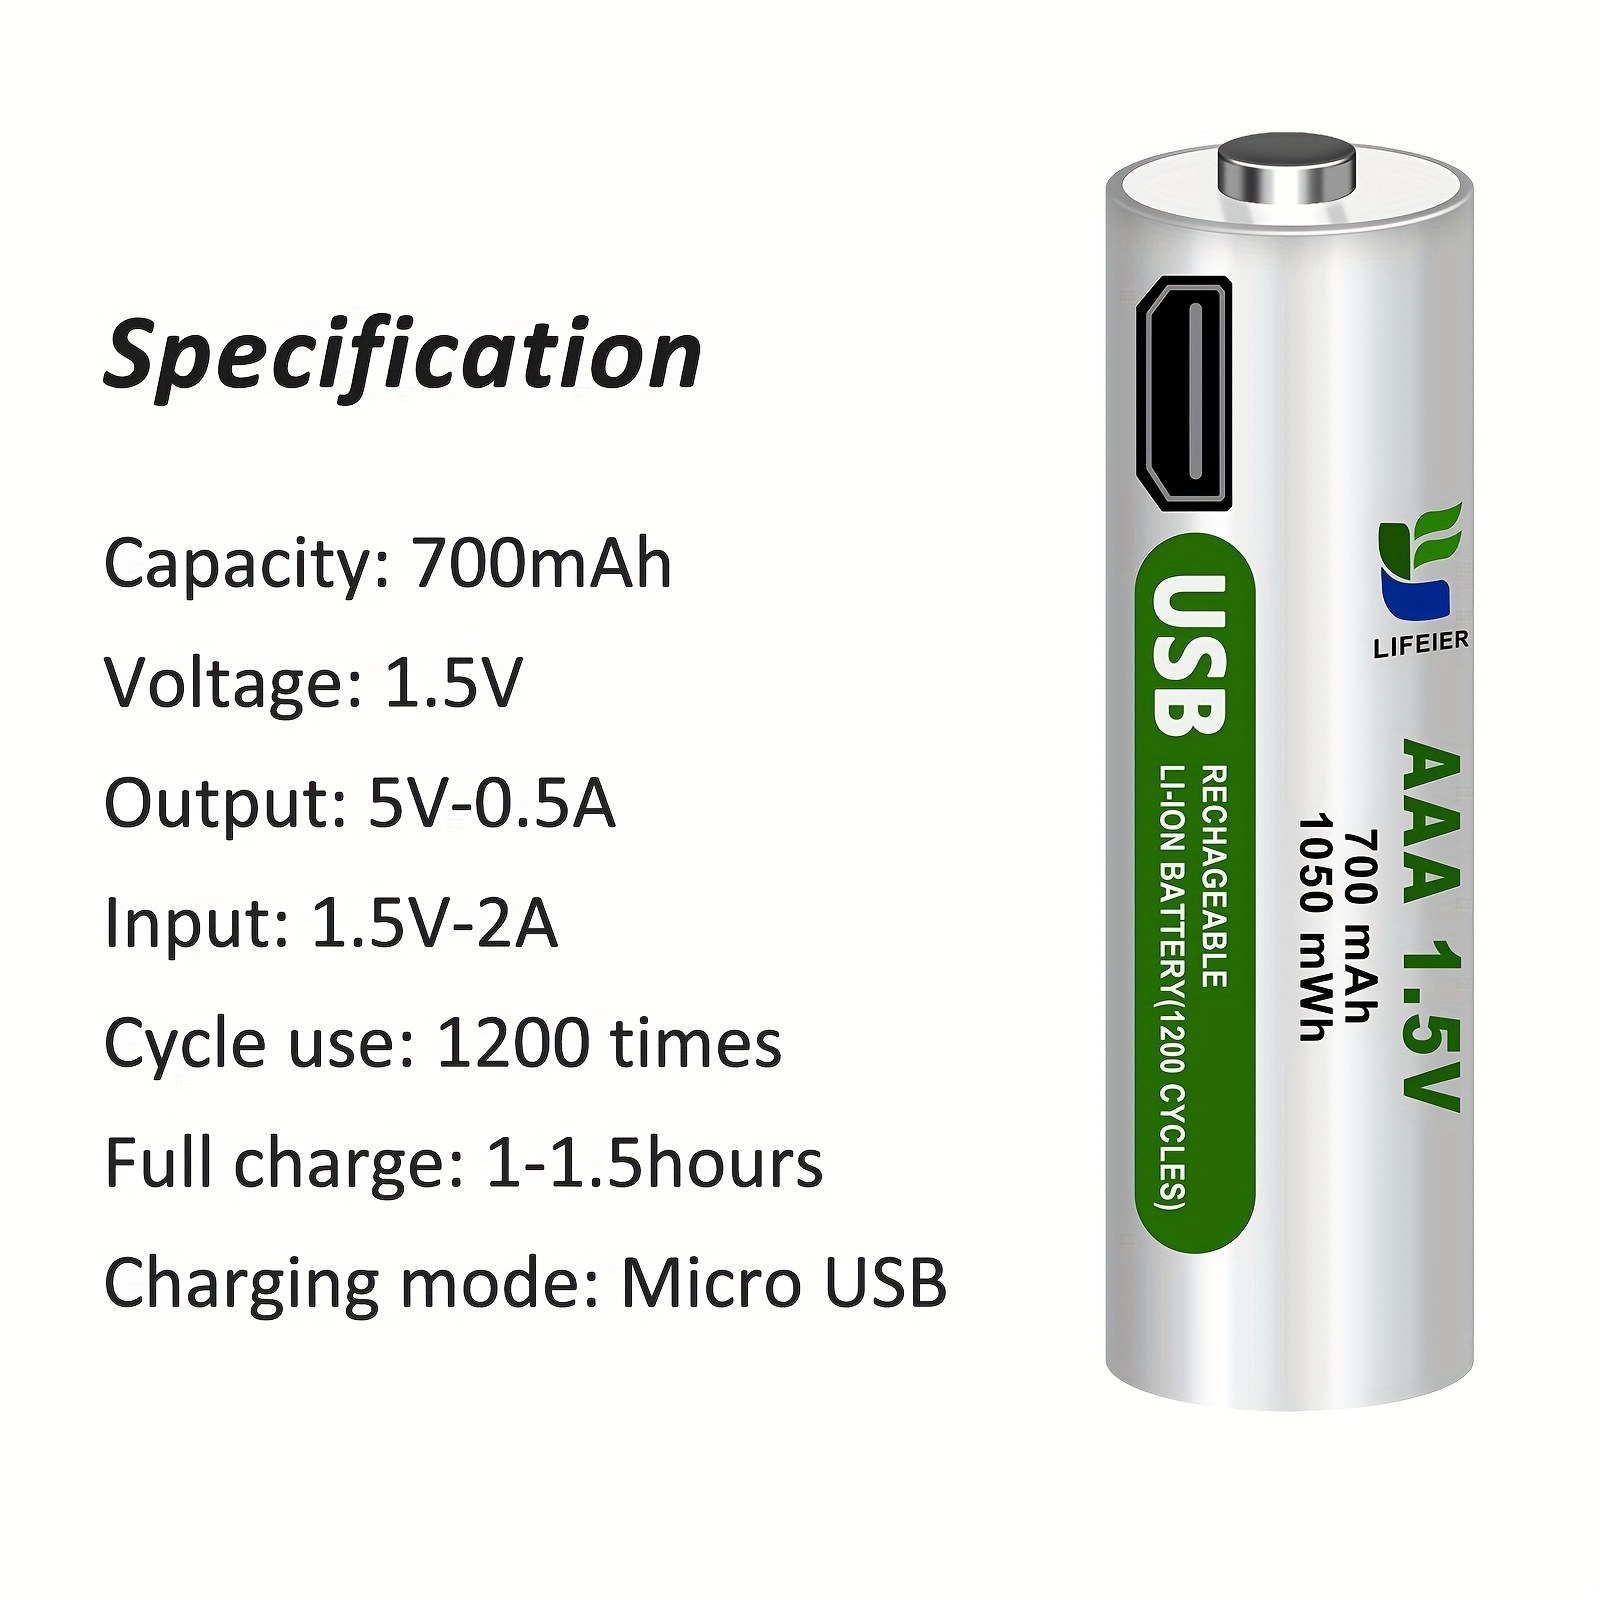 Batería recargable AA de 1,5 V y 1,5 V, pila recargable de iones de